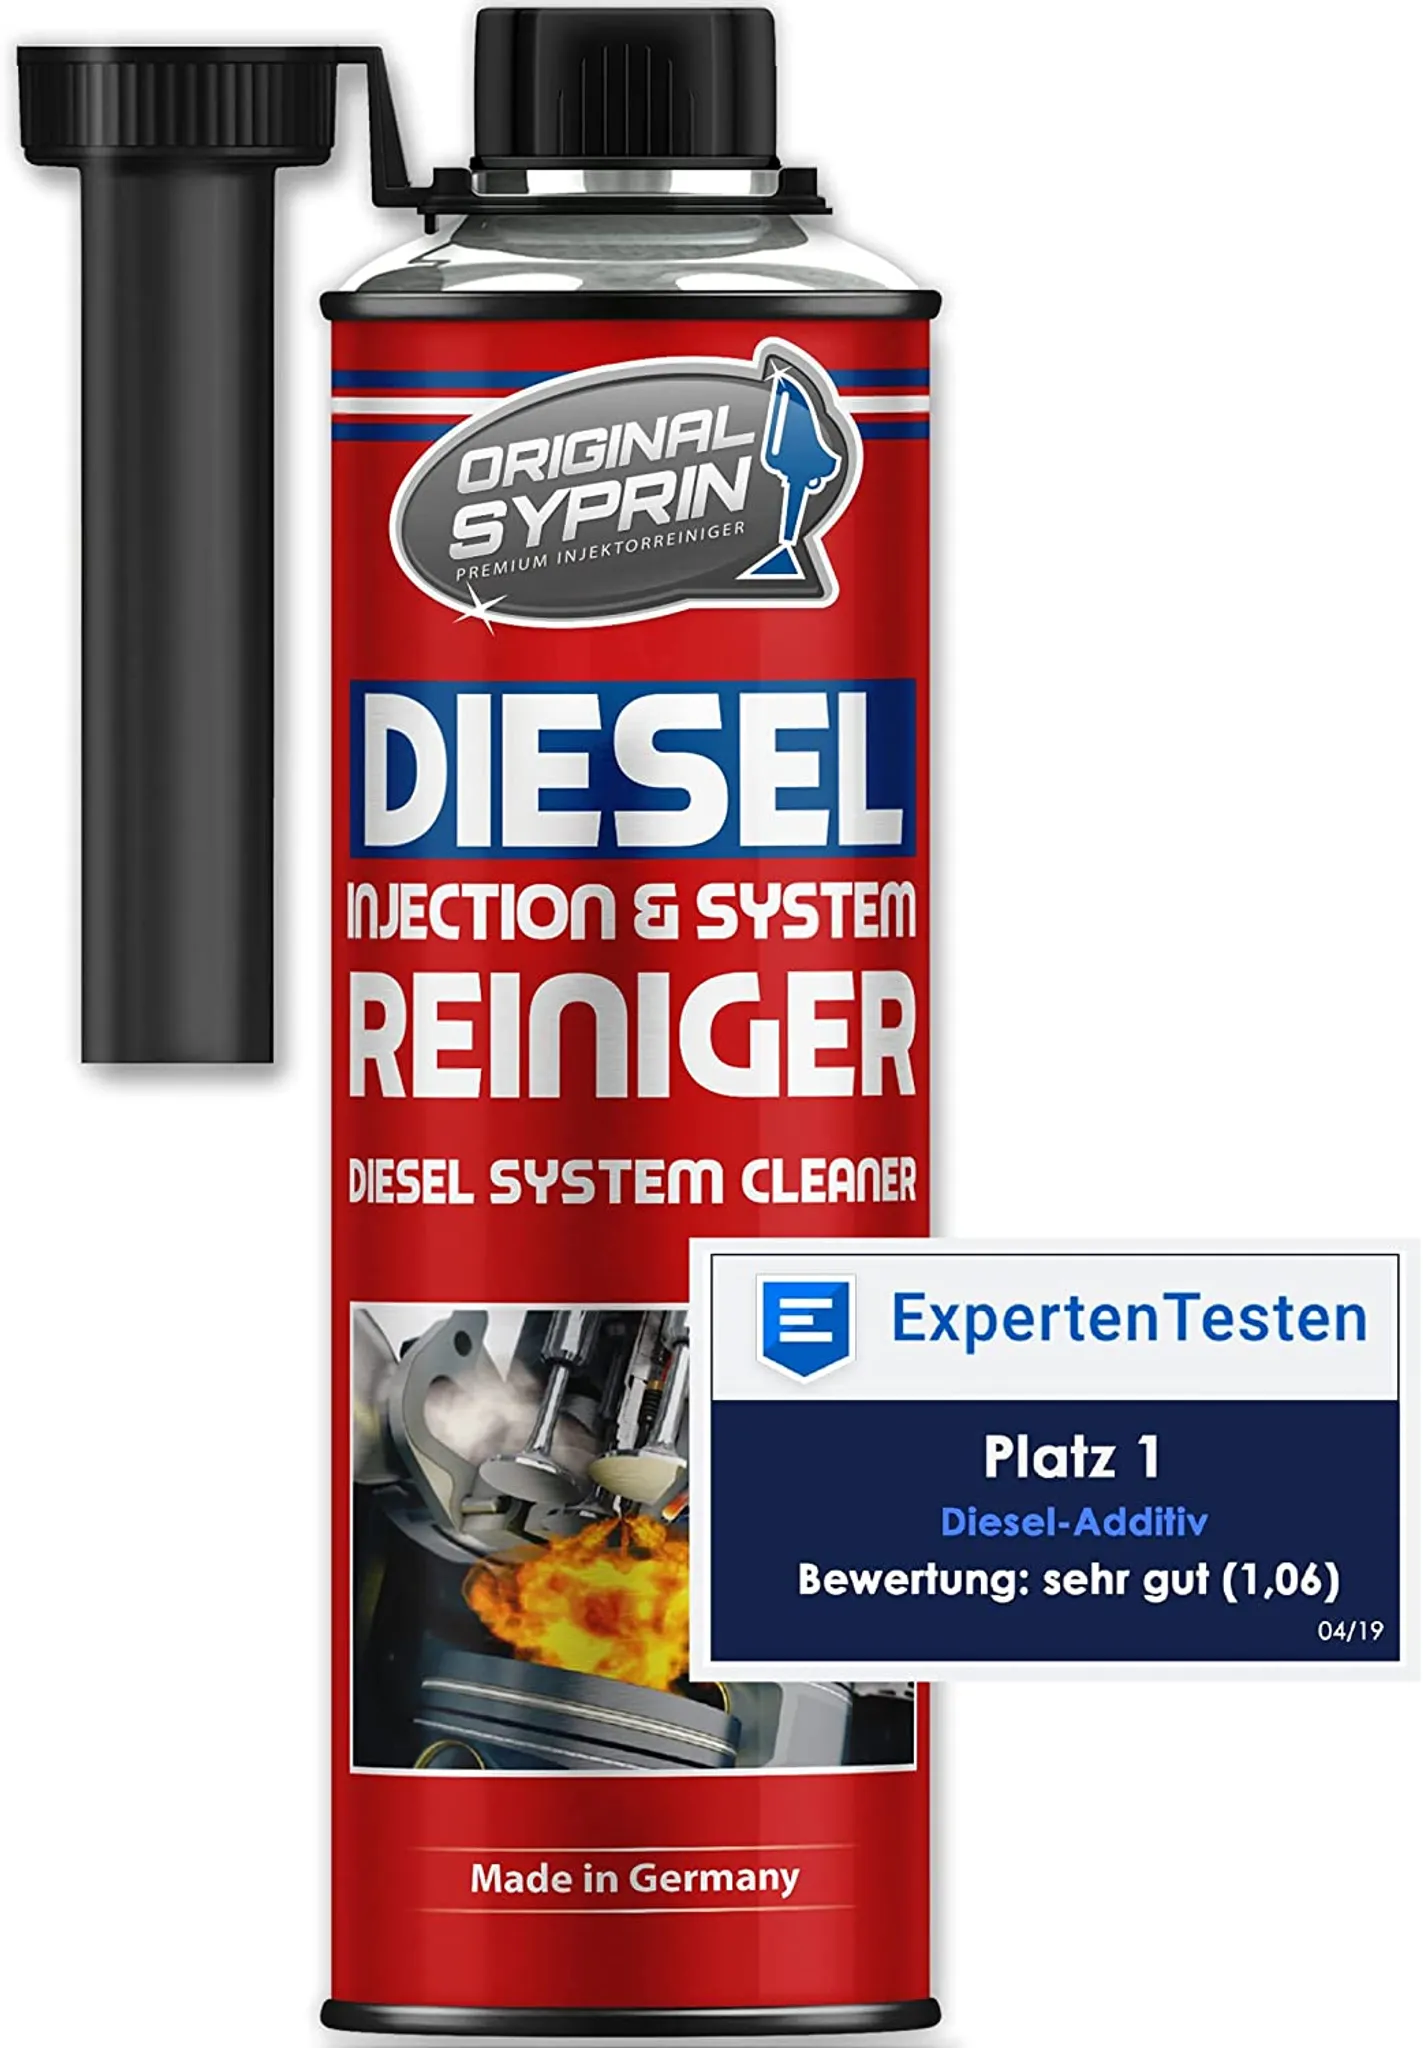 MOTUL 300 ml Injektor Reiniger Diesel Additiv Injektorreiniger  Kraftstoffsystem, 110673